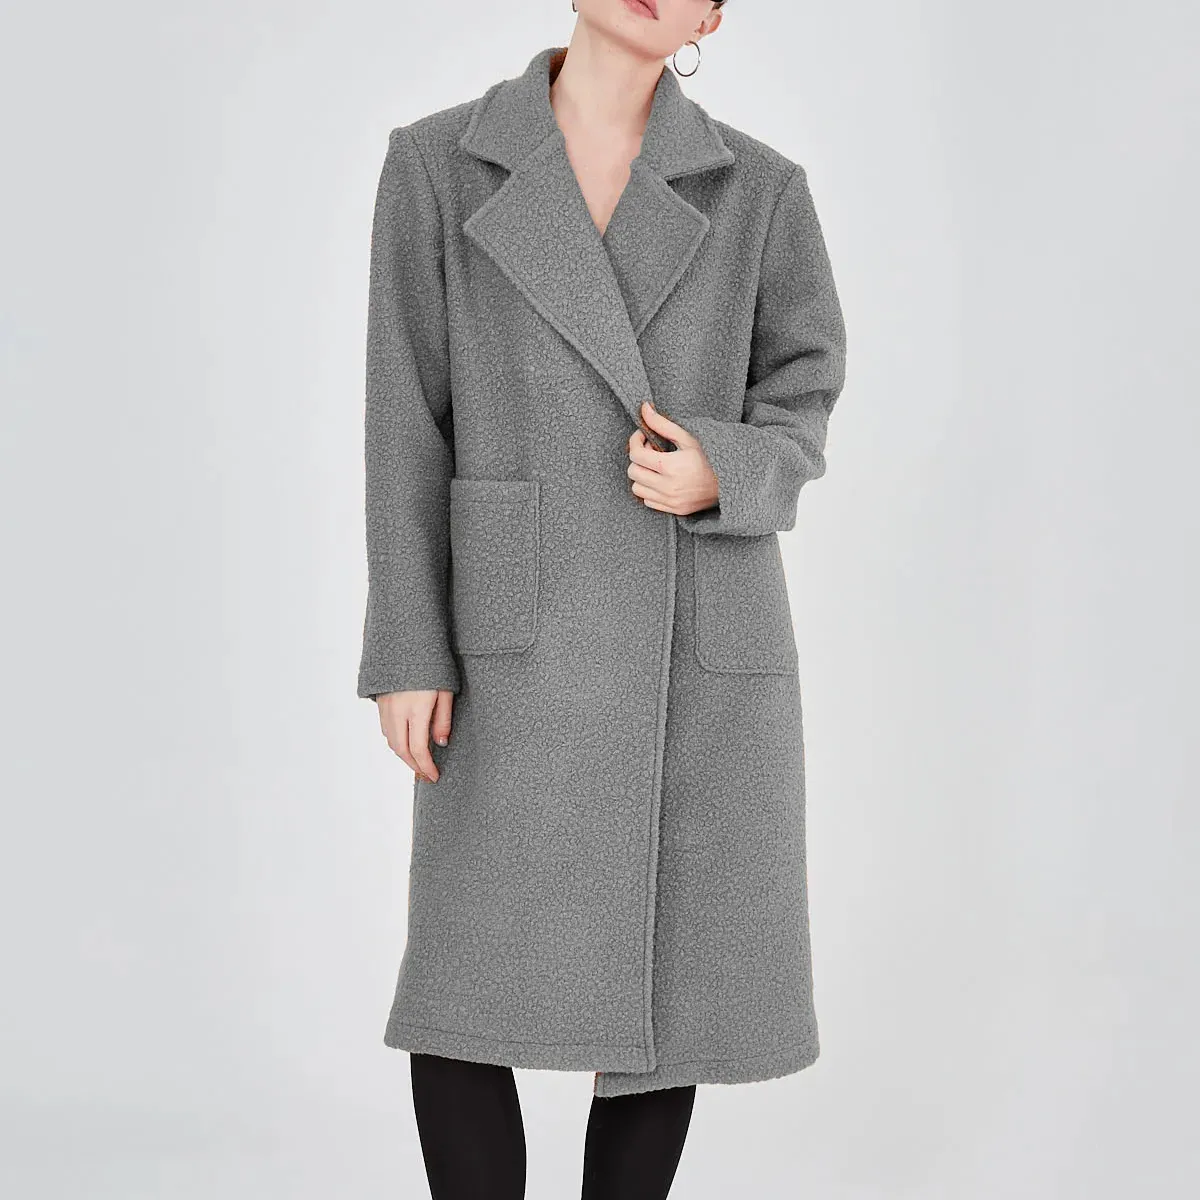 Color gris Piel larga Tela de lana Color gris Piel abrigo de piel de manga larga